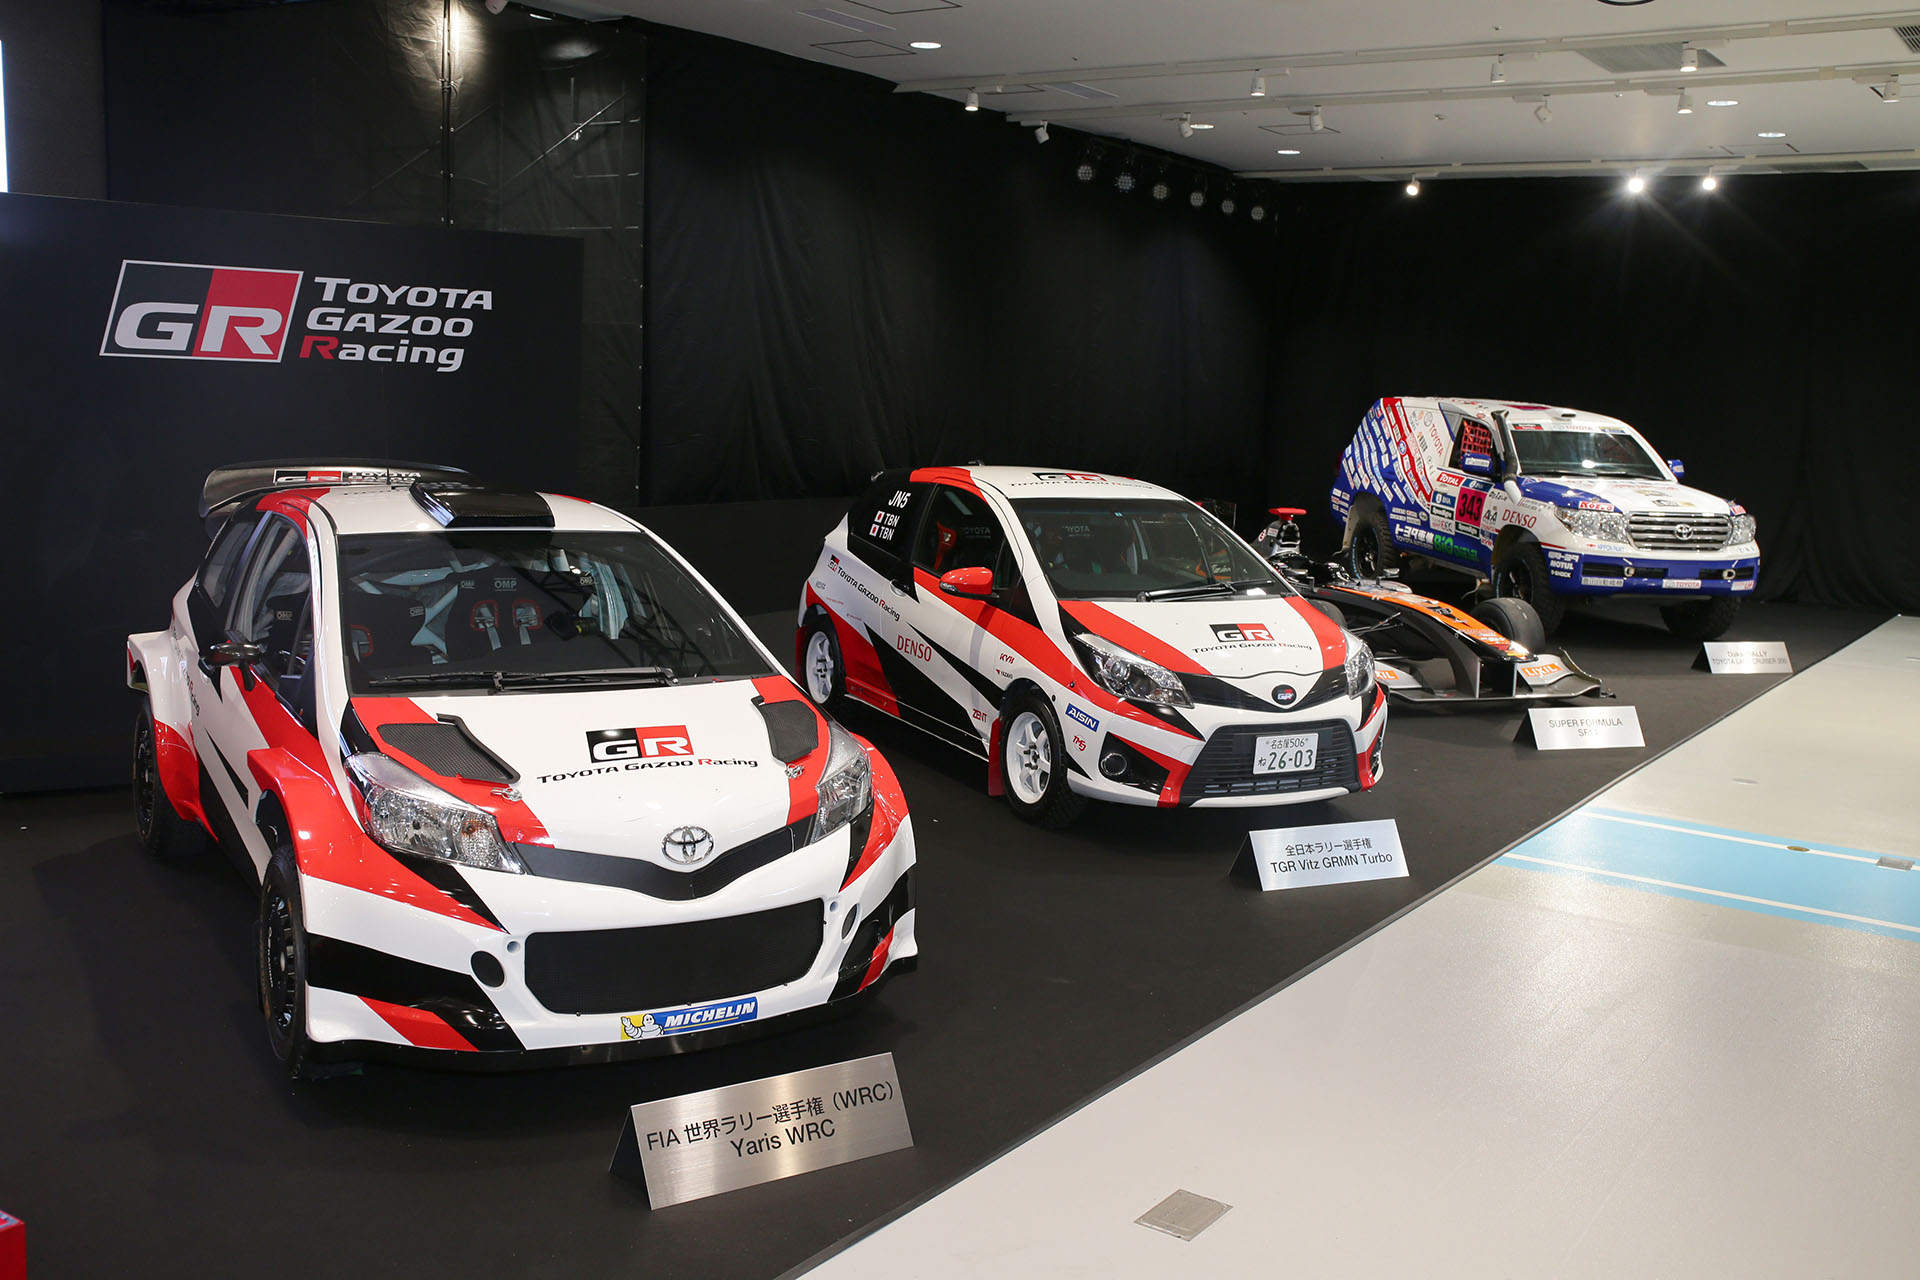 2016 Toyota GAZOO Racing Activity Press Conference